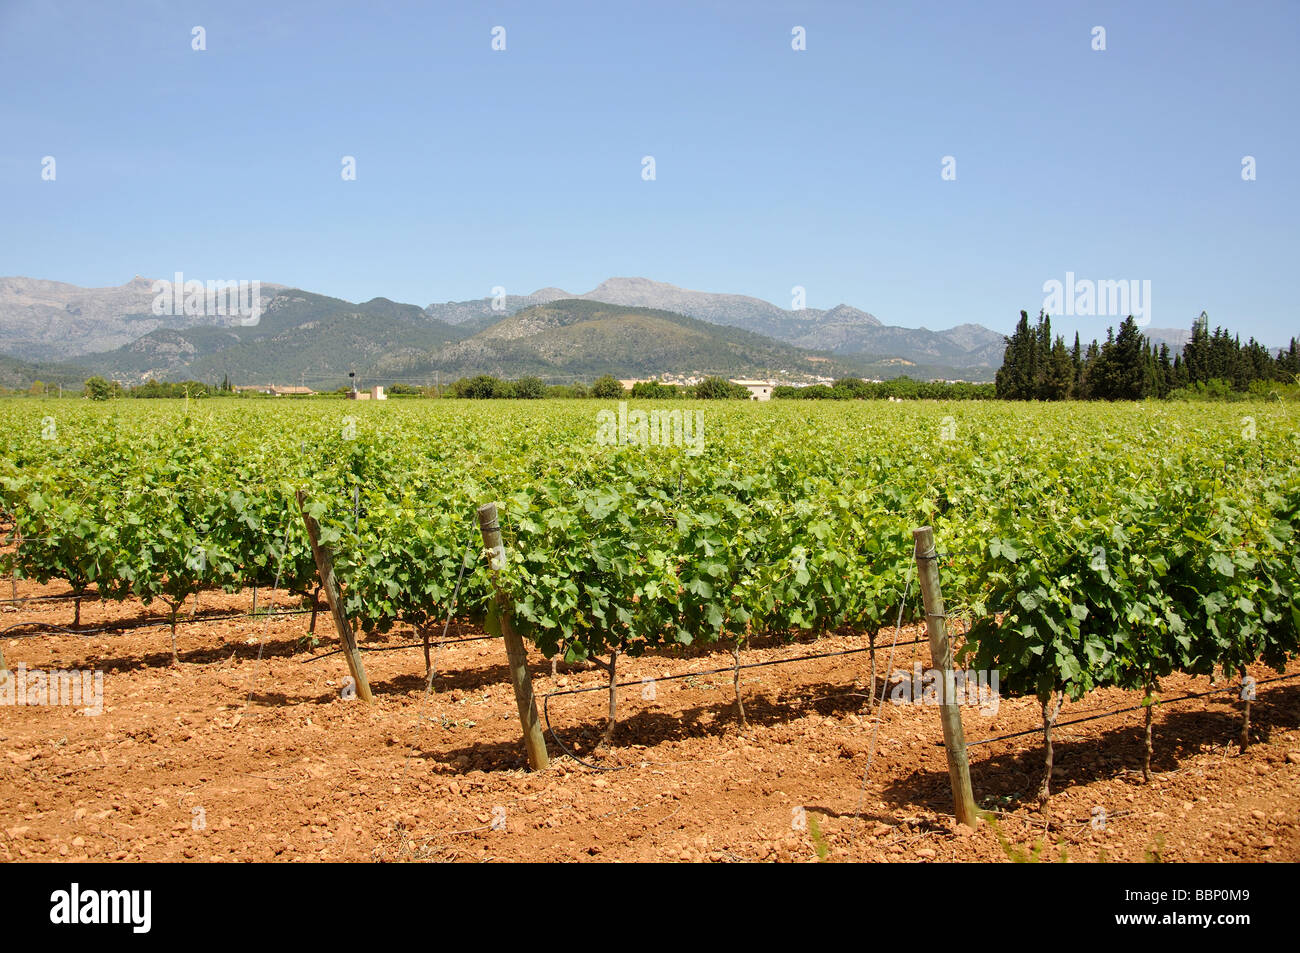 Rows of vines in local vineyard, Binissalem, Binissalem Municipality, Mallorca (Majorca), Balearic Islands, Spain Stock Photo